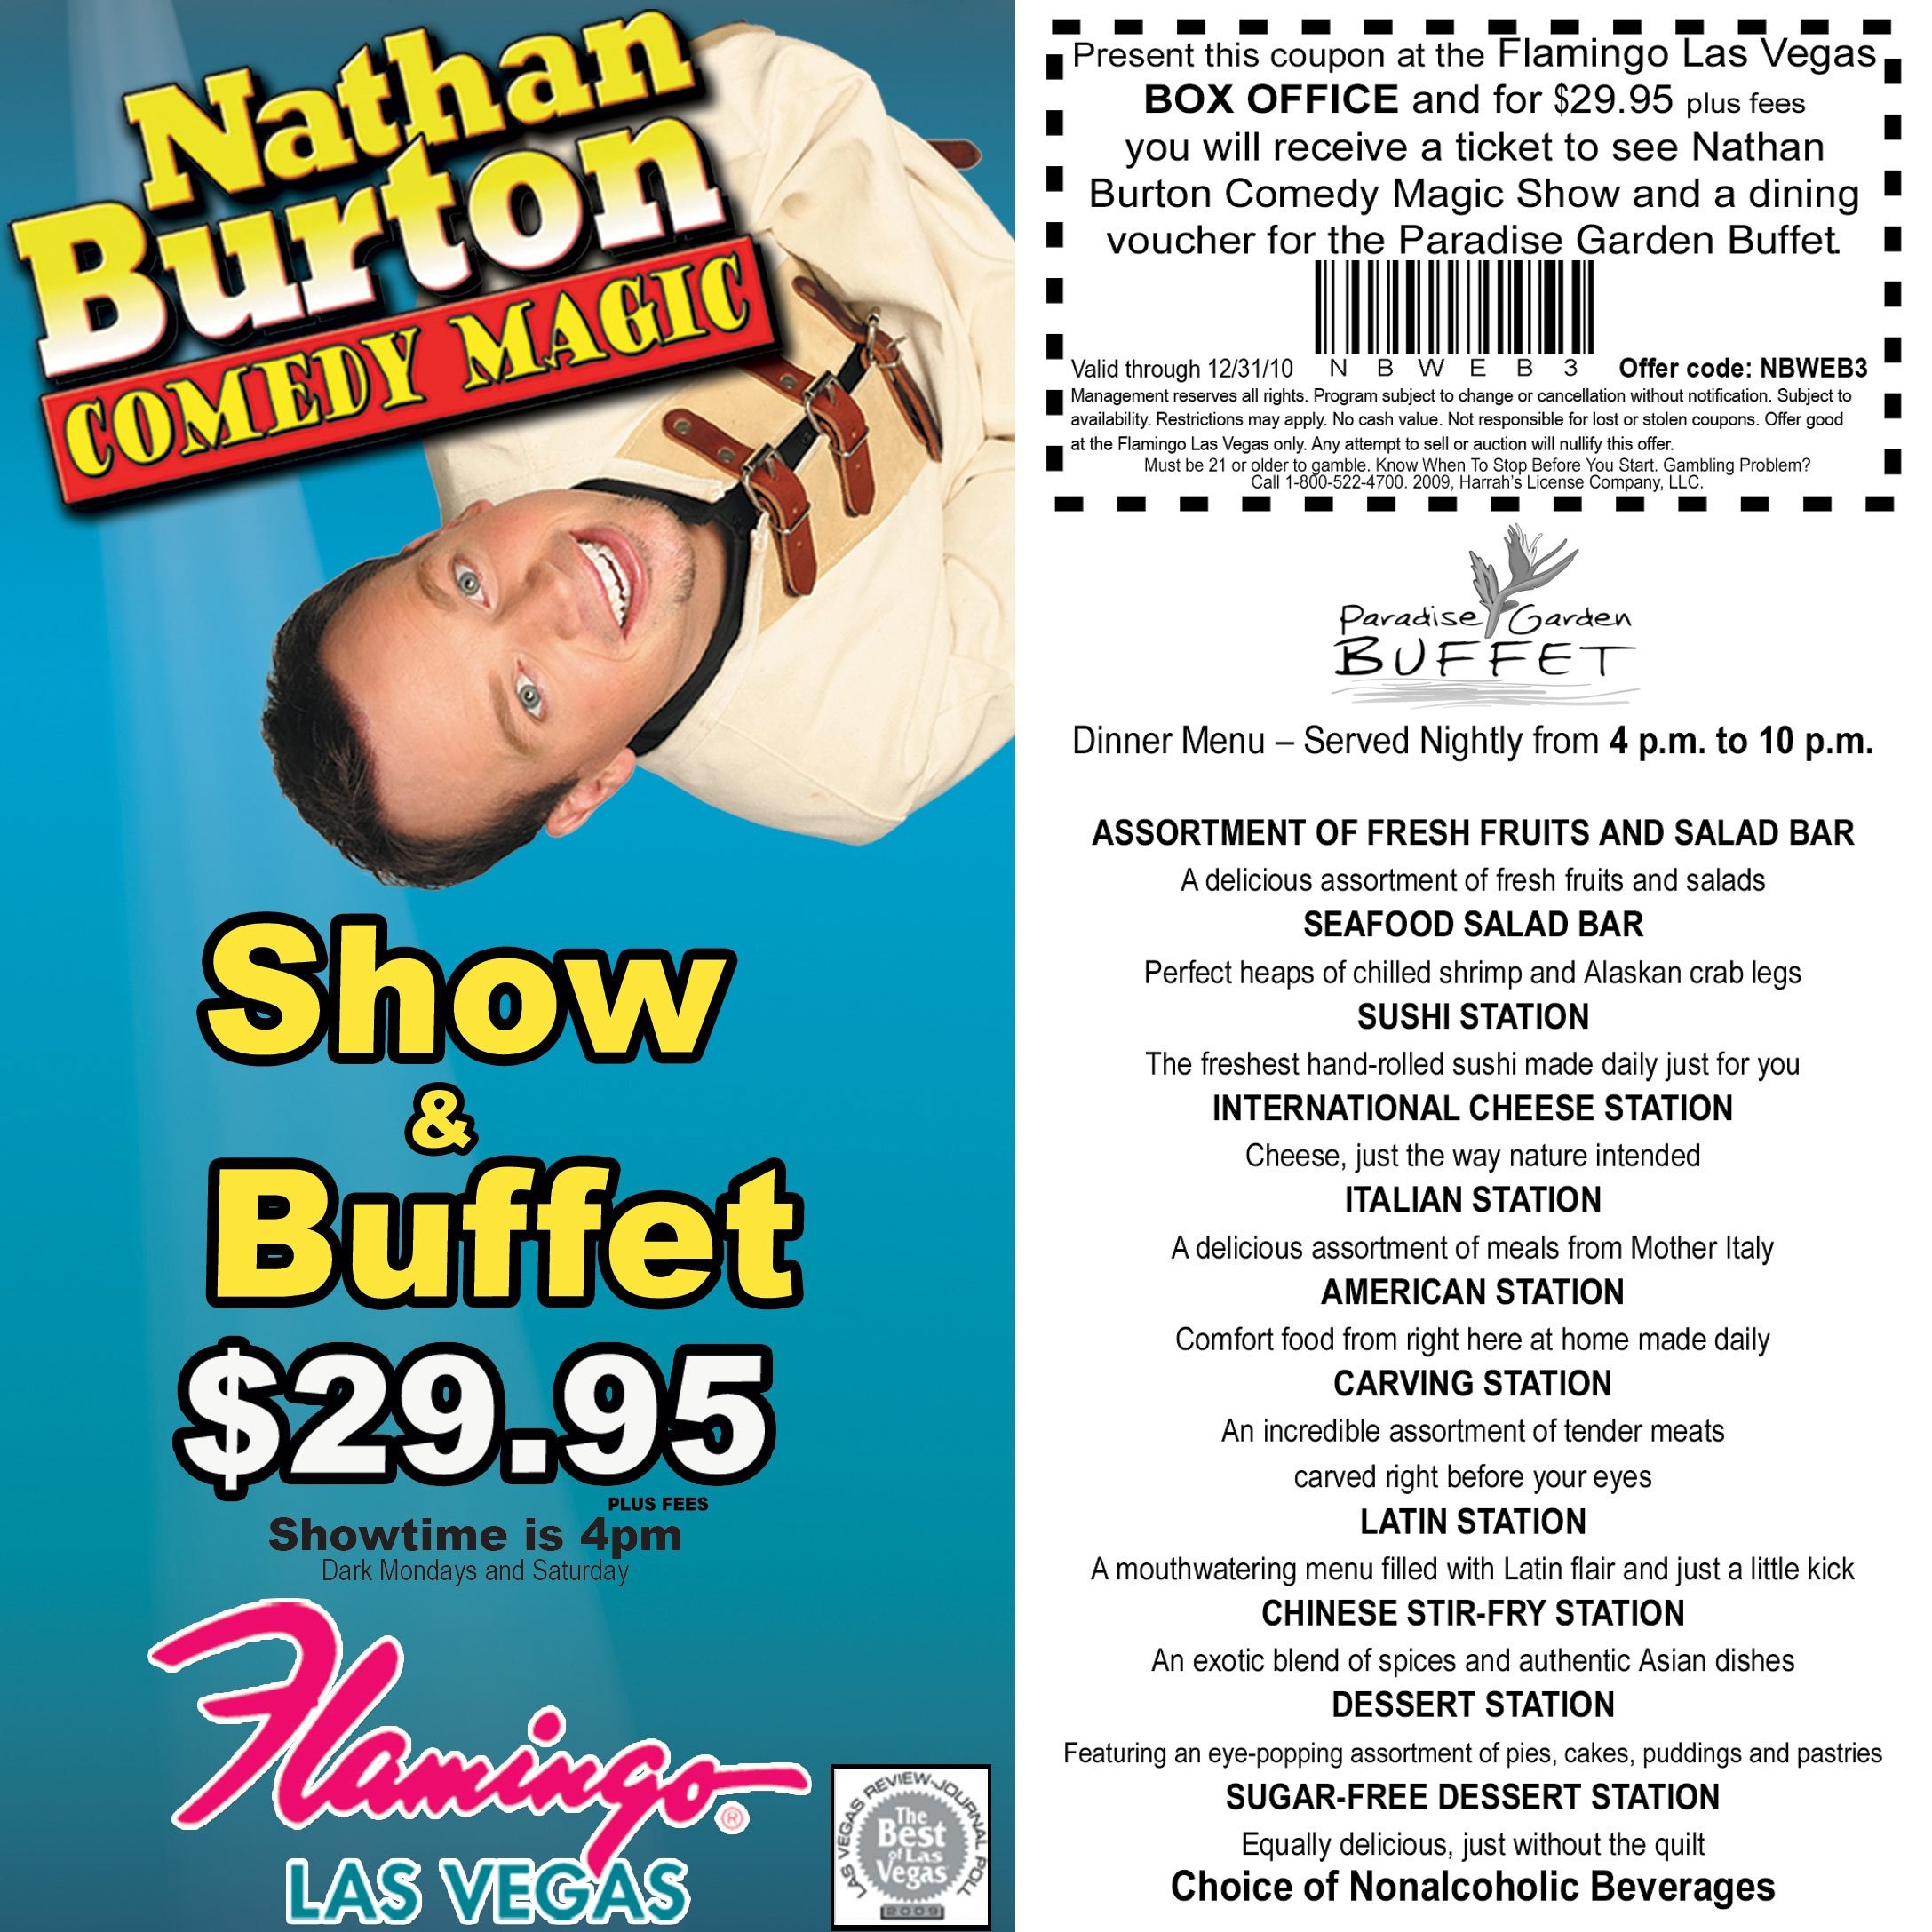 Las Vegas Coupons 2 For 1 Discounts Buffet Deals Salad Bar Buffet - Free Las Vegas Buffet Coupons Printable